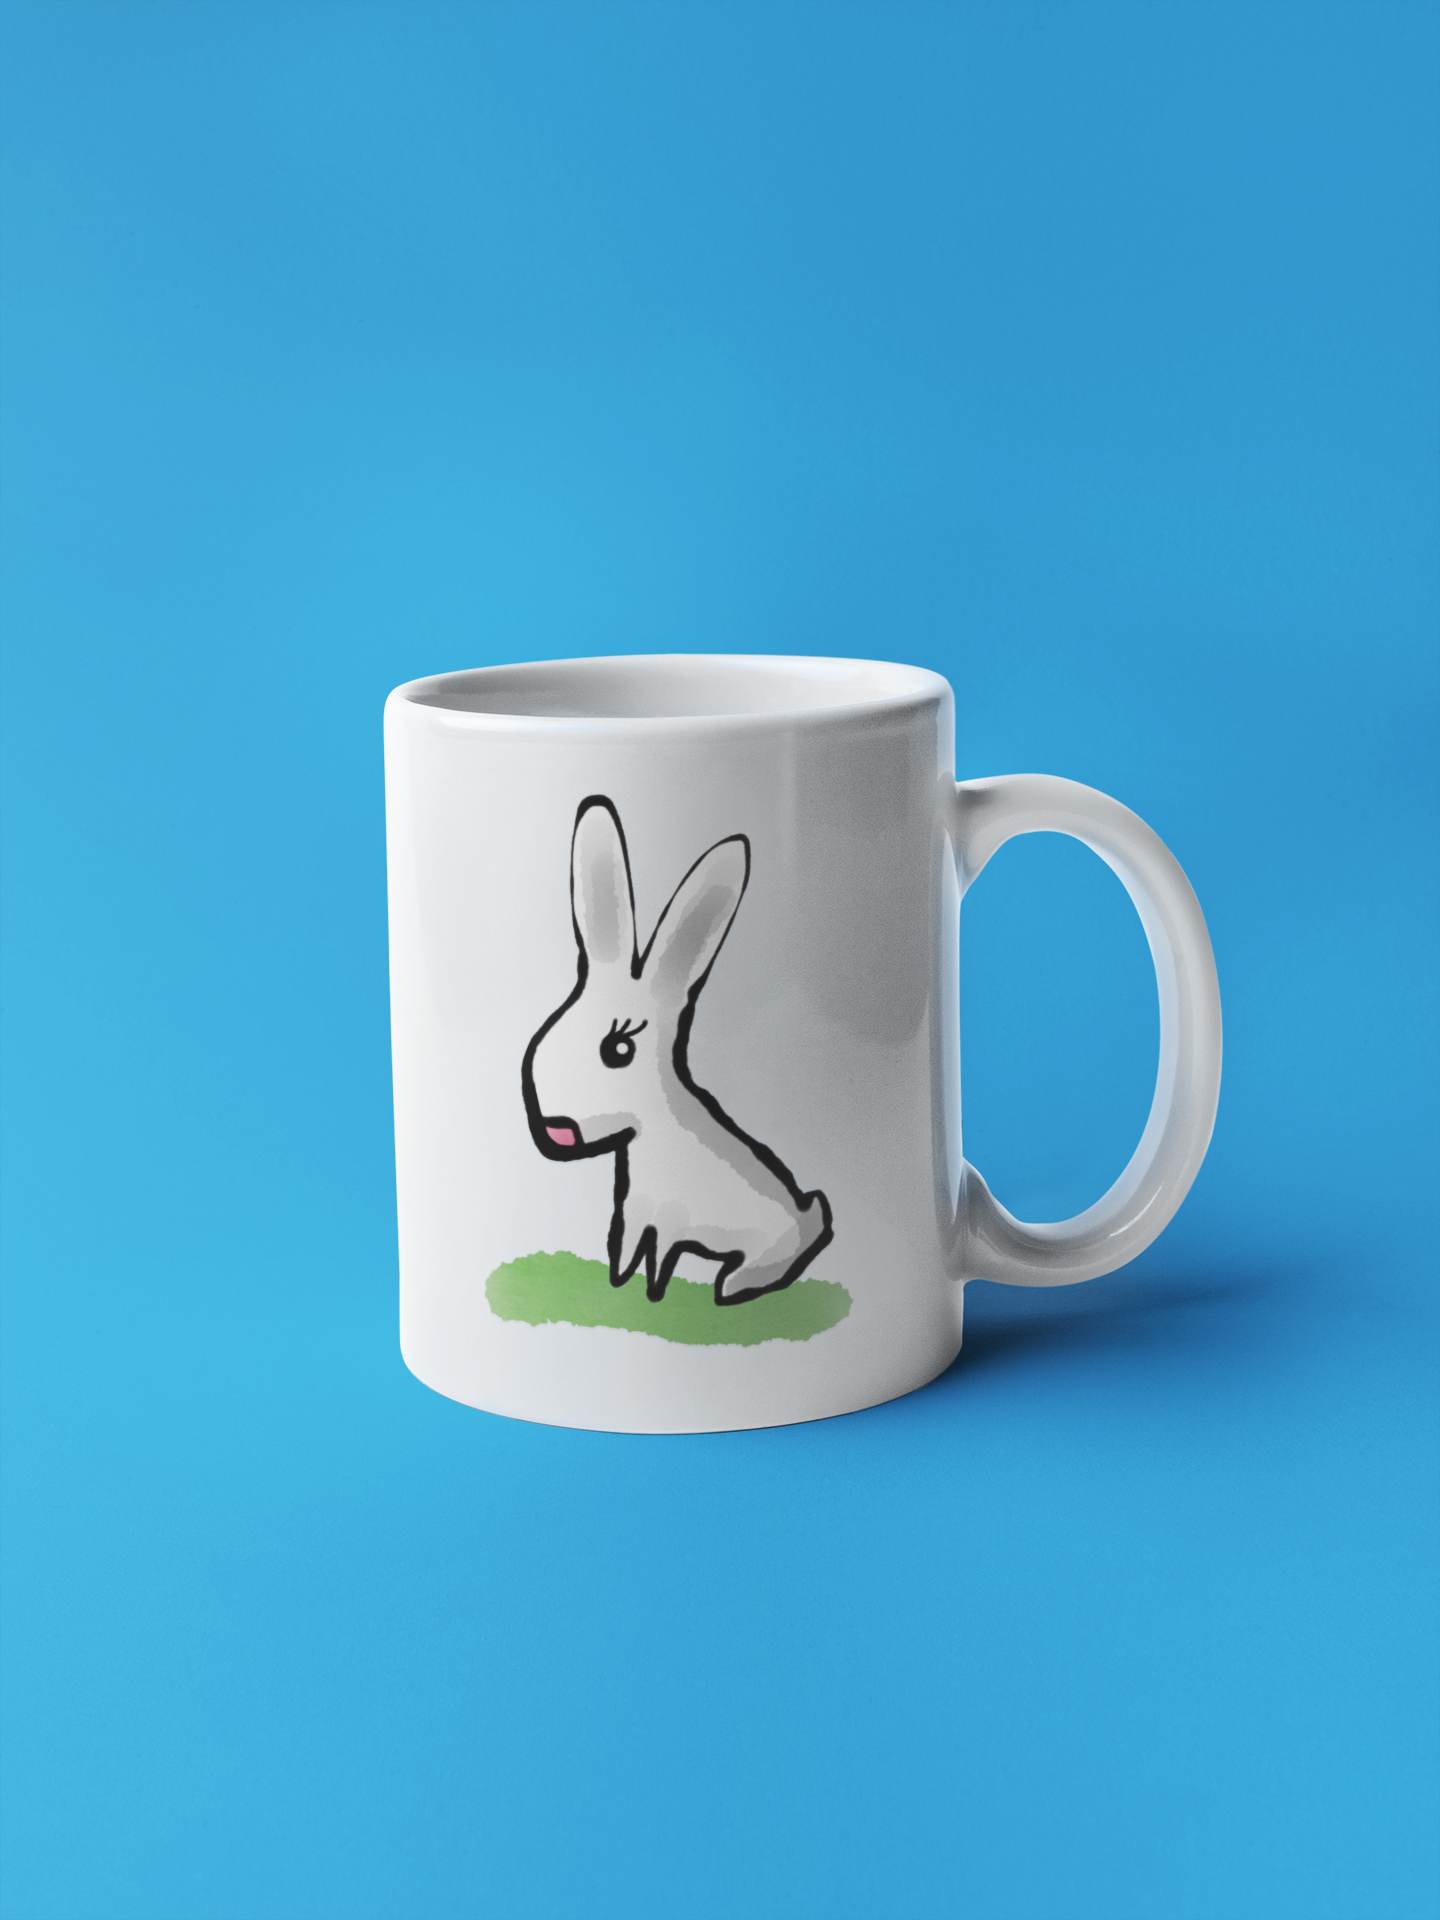 Cute Bunny coffee mug illustration by Hector and Bone